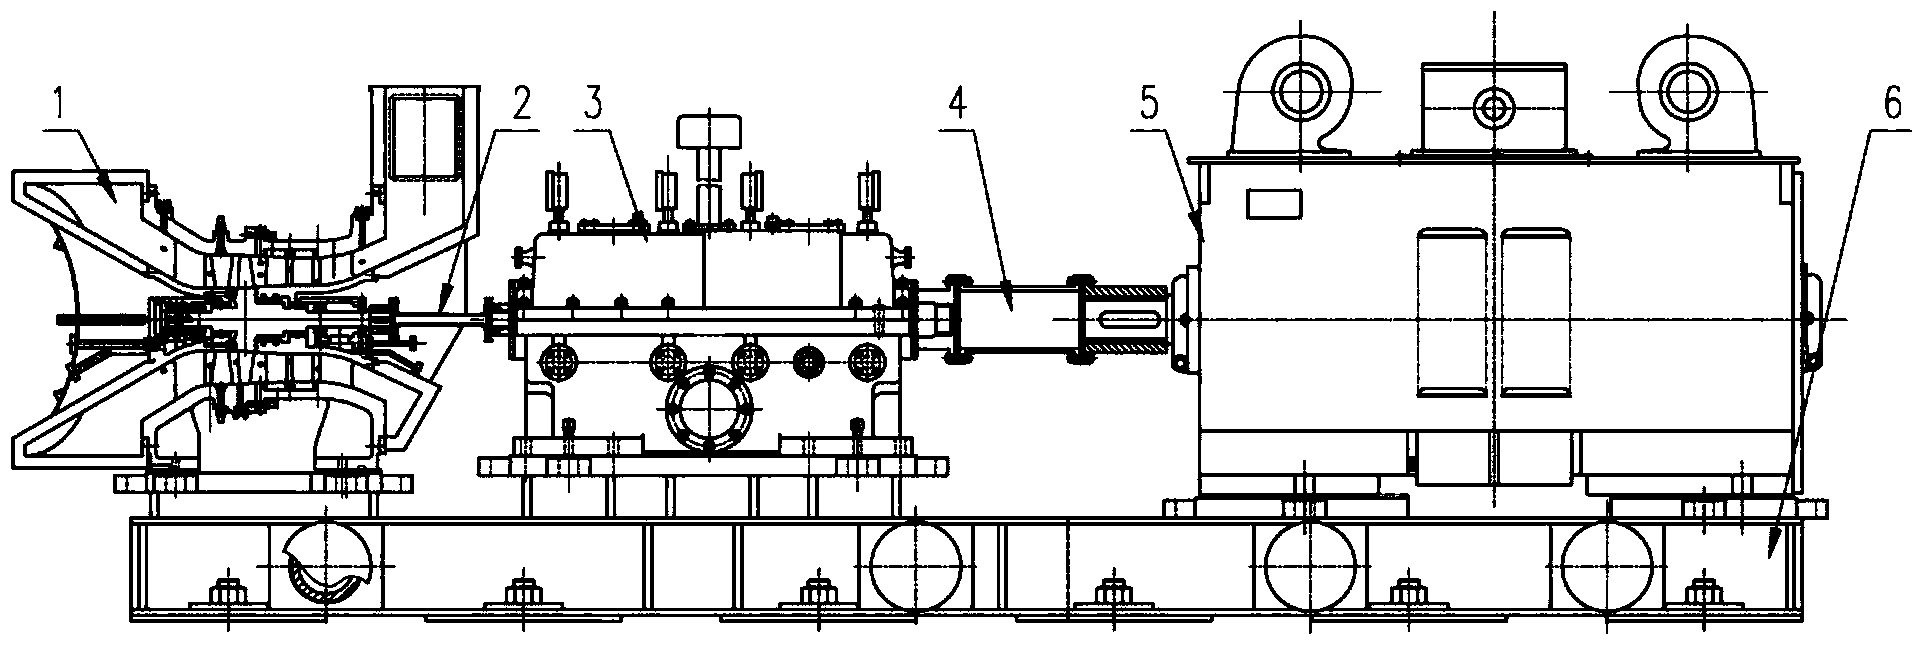 1.5-level transonic axial-flow air compressor testing apparatus